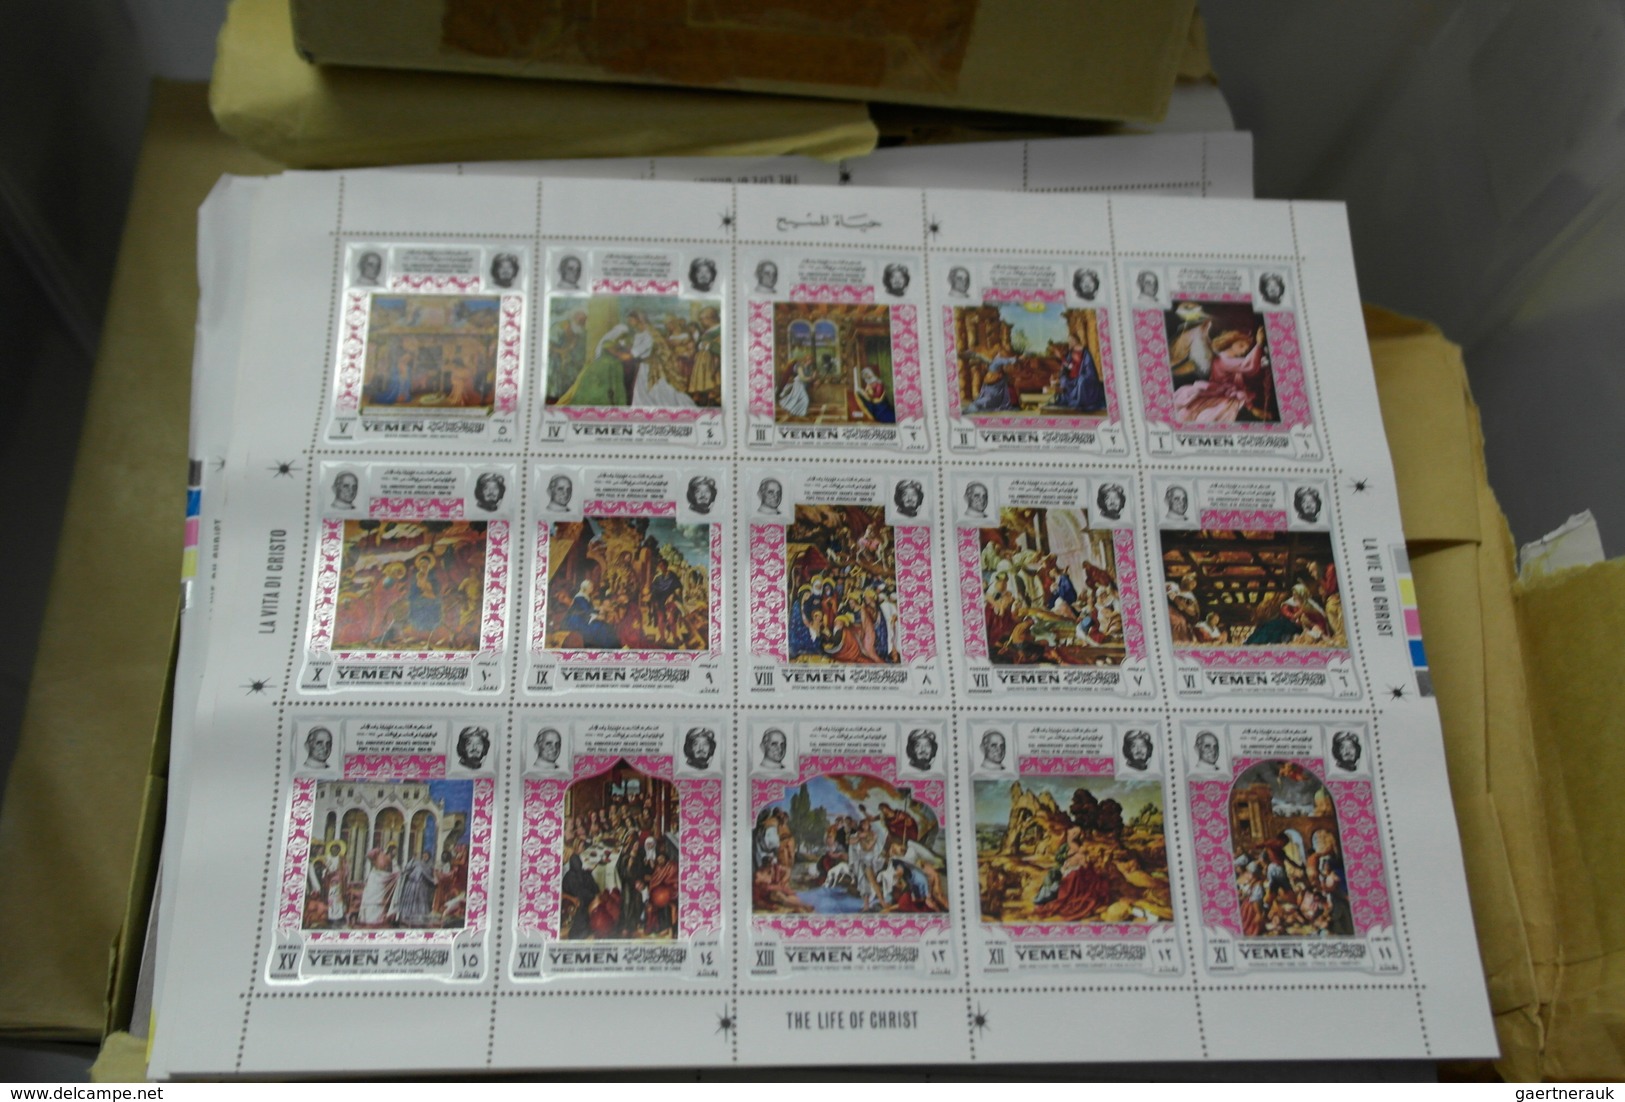 23149 Jemen - Königreich: 1960s, and Ajman, Mahra etc. Phenomenal lot consisting of 245 boxes containing i